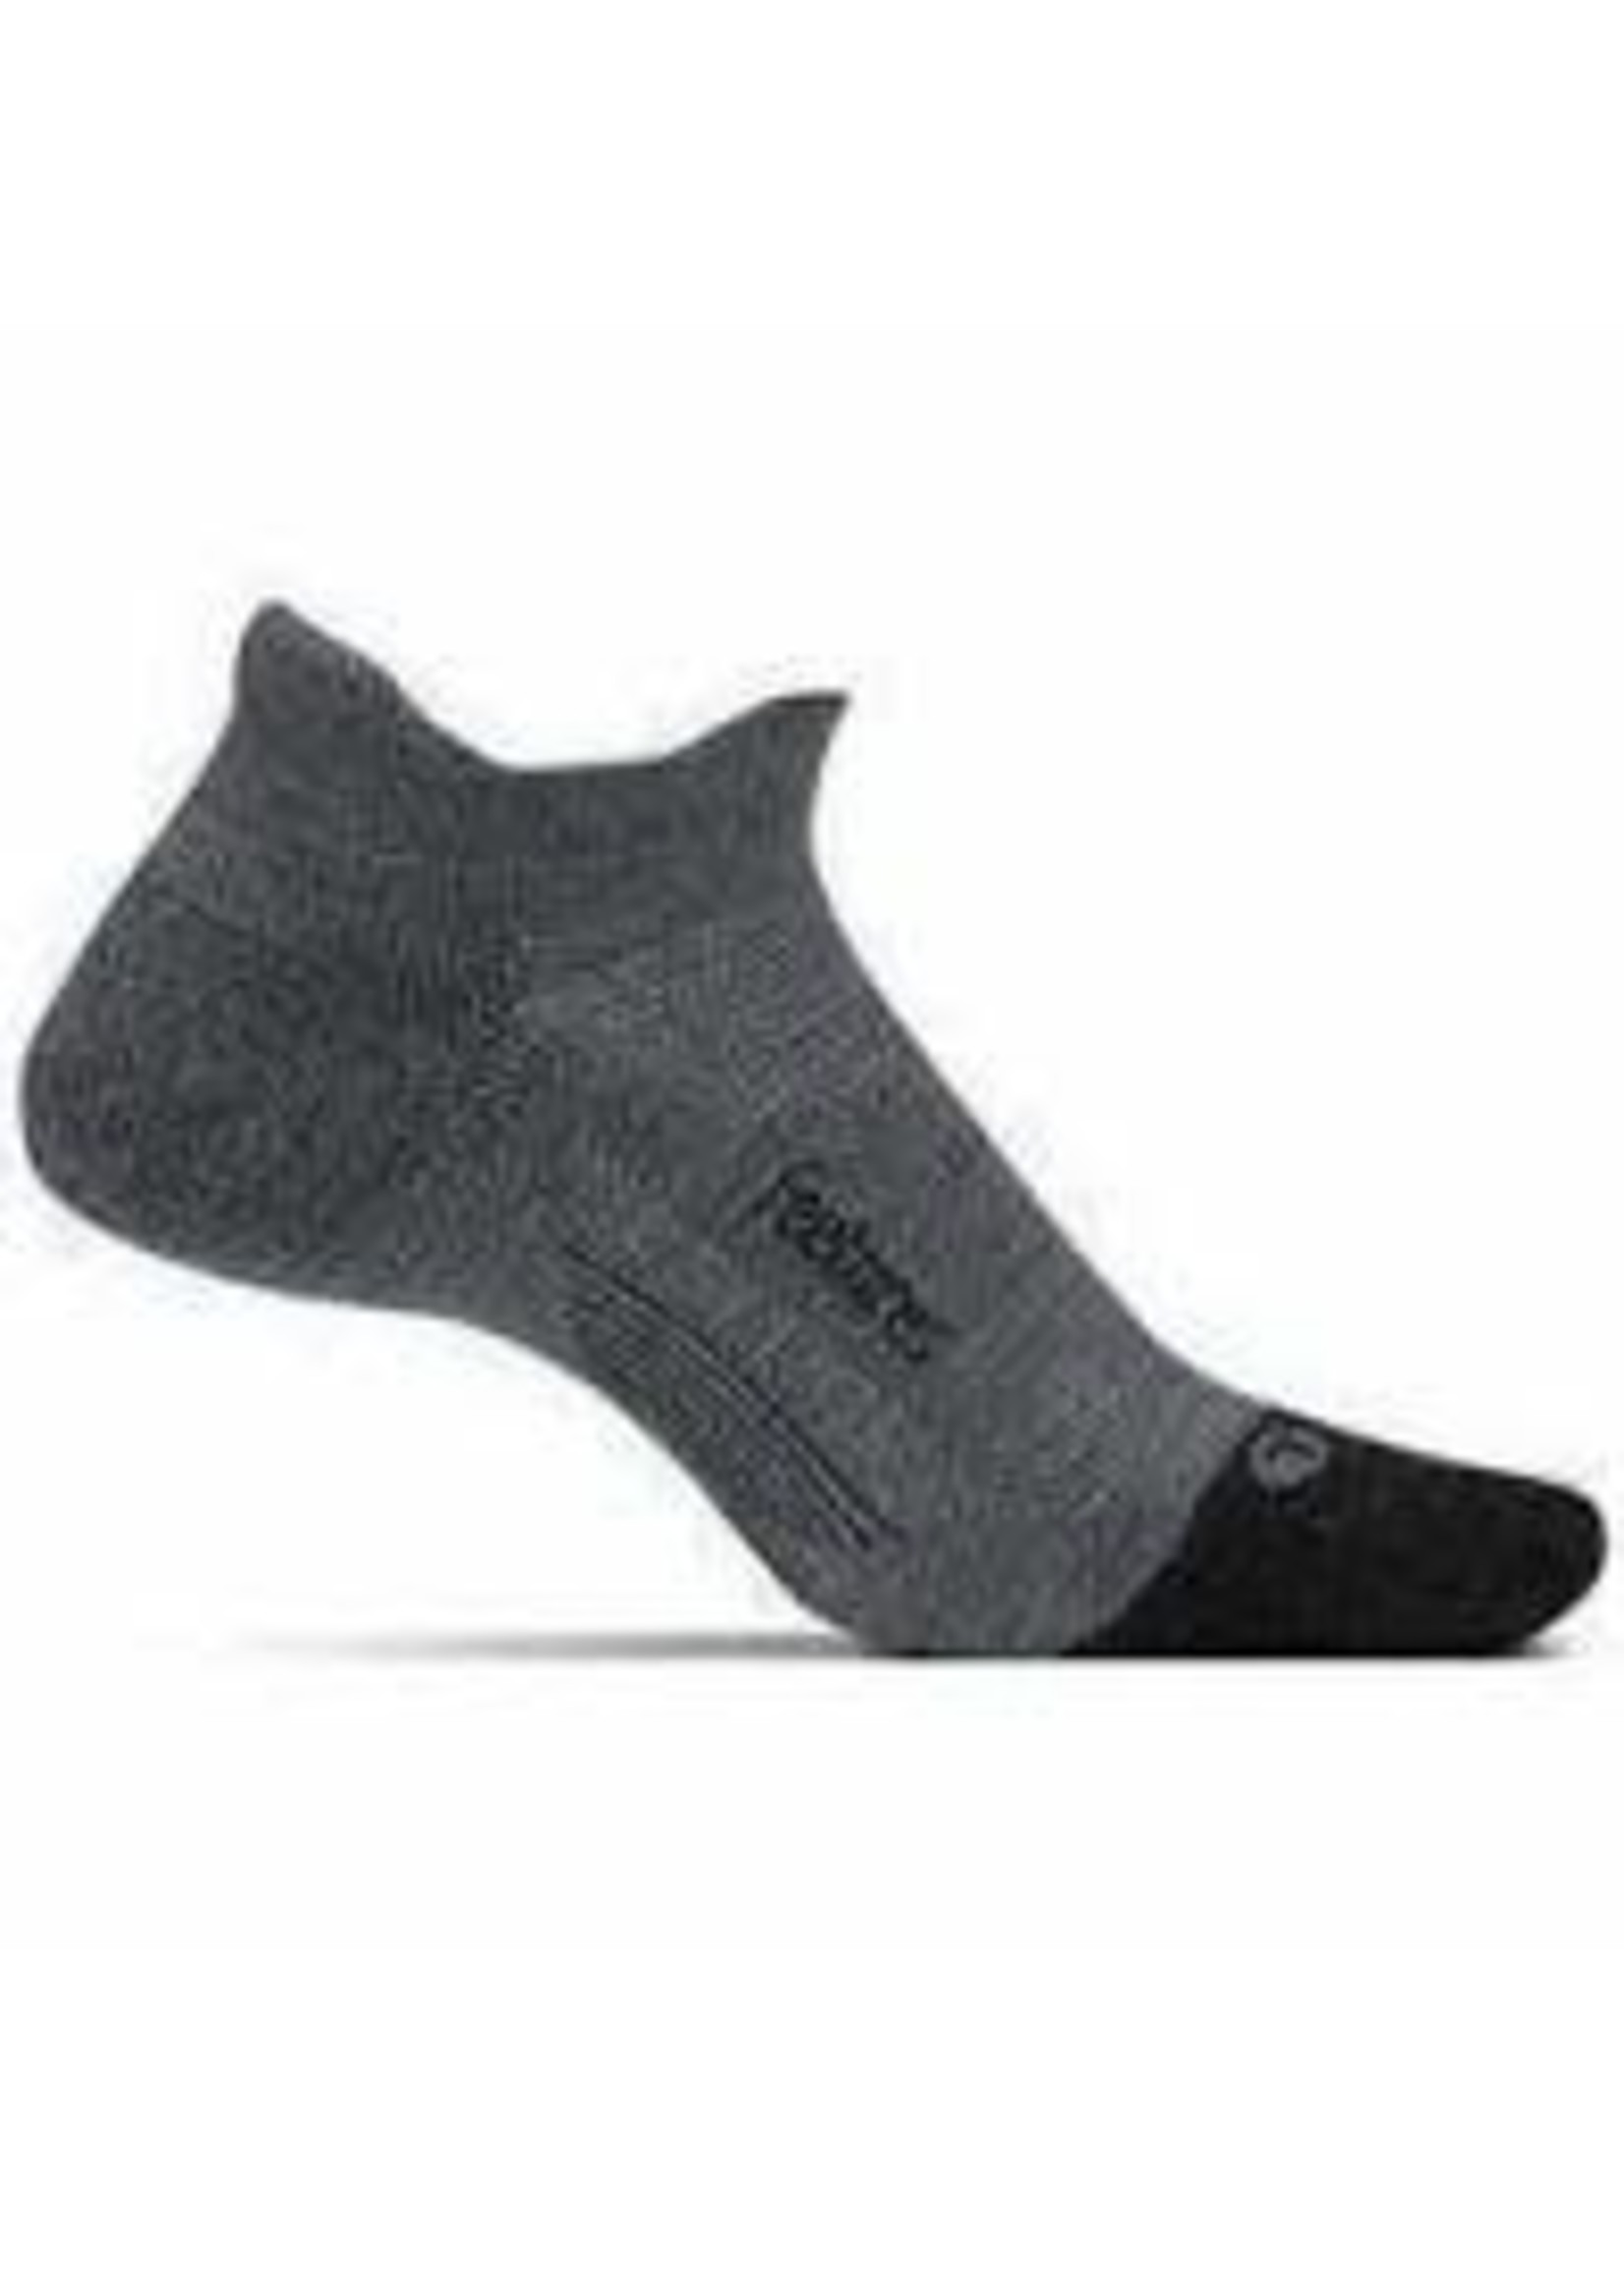 Feetures Socks Feetures Merino 10 Cushion N0 Show